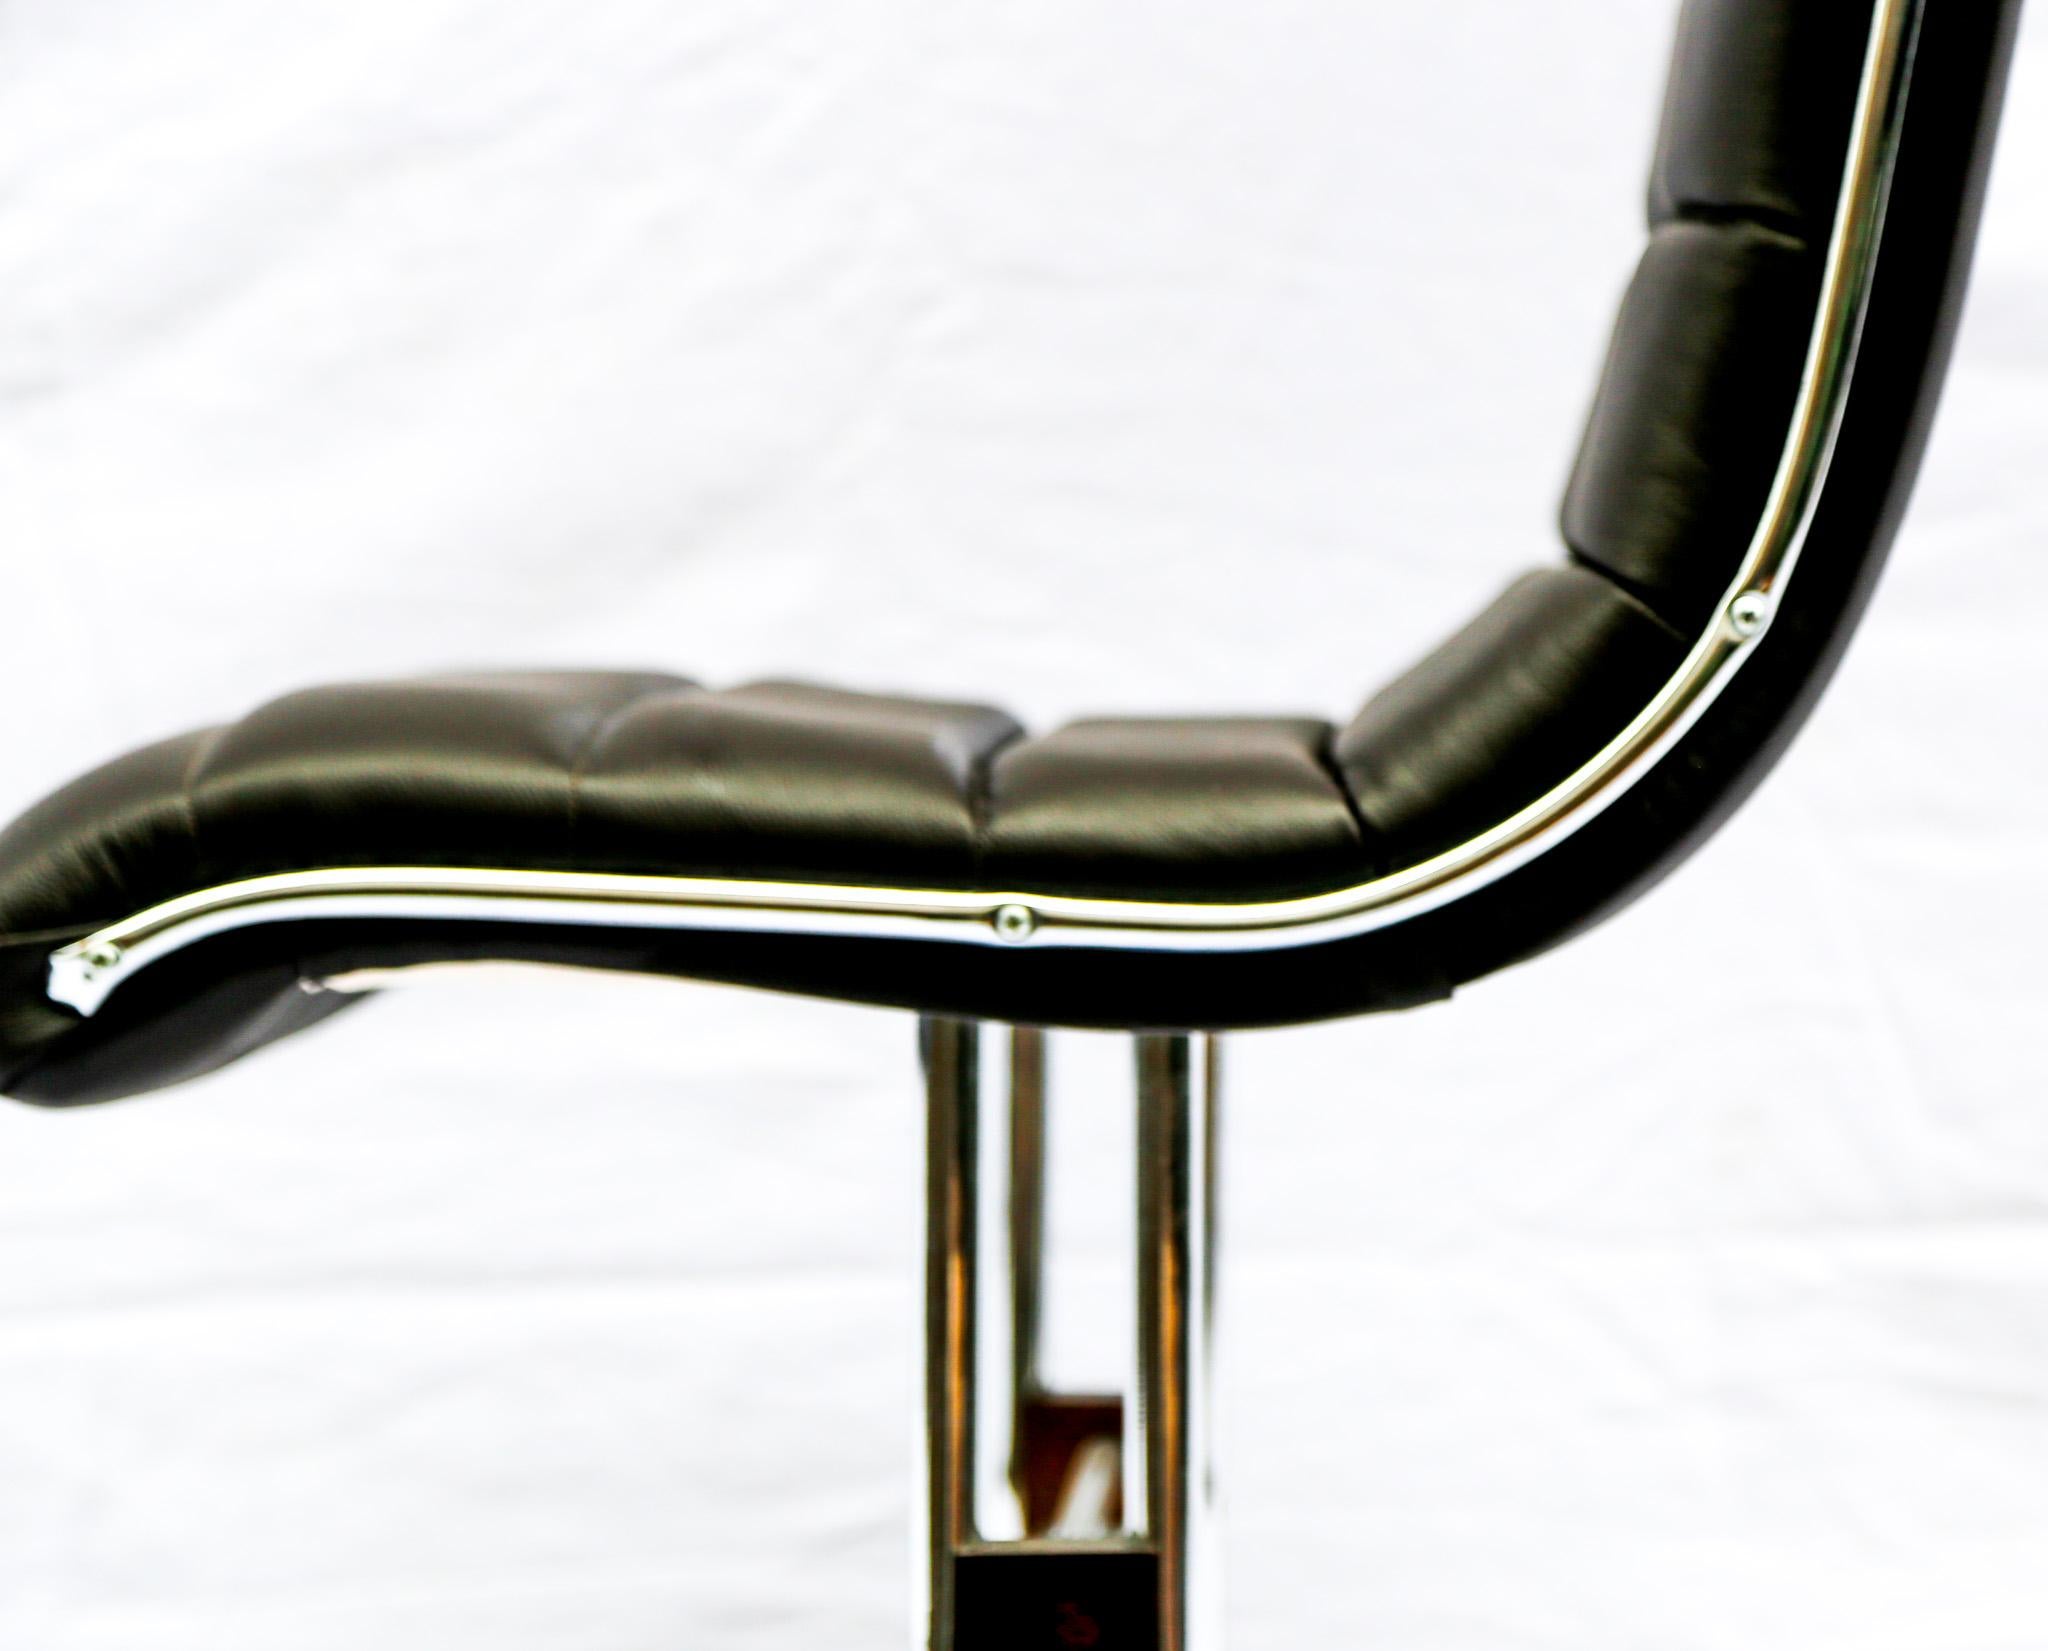 Brazilian Modern Chair Set in Leather, Chrome and Hardwood, by Braszenski, 1970s For Sale 2